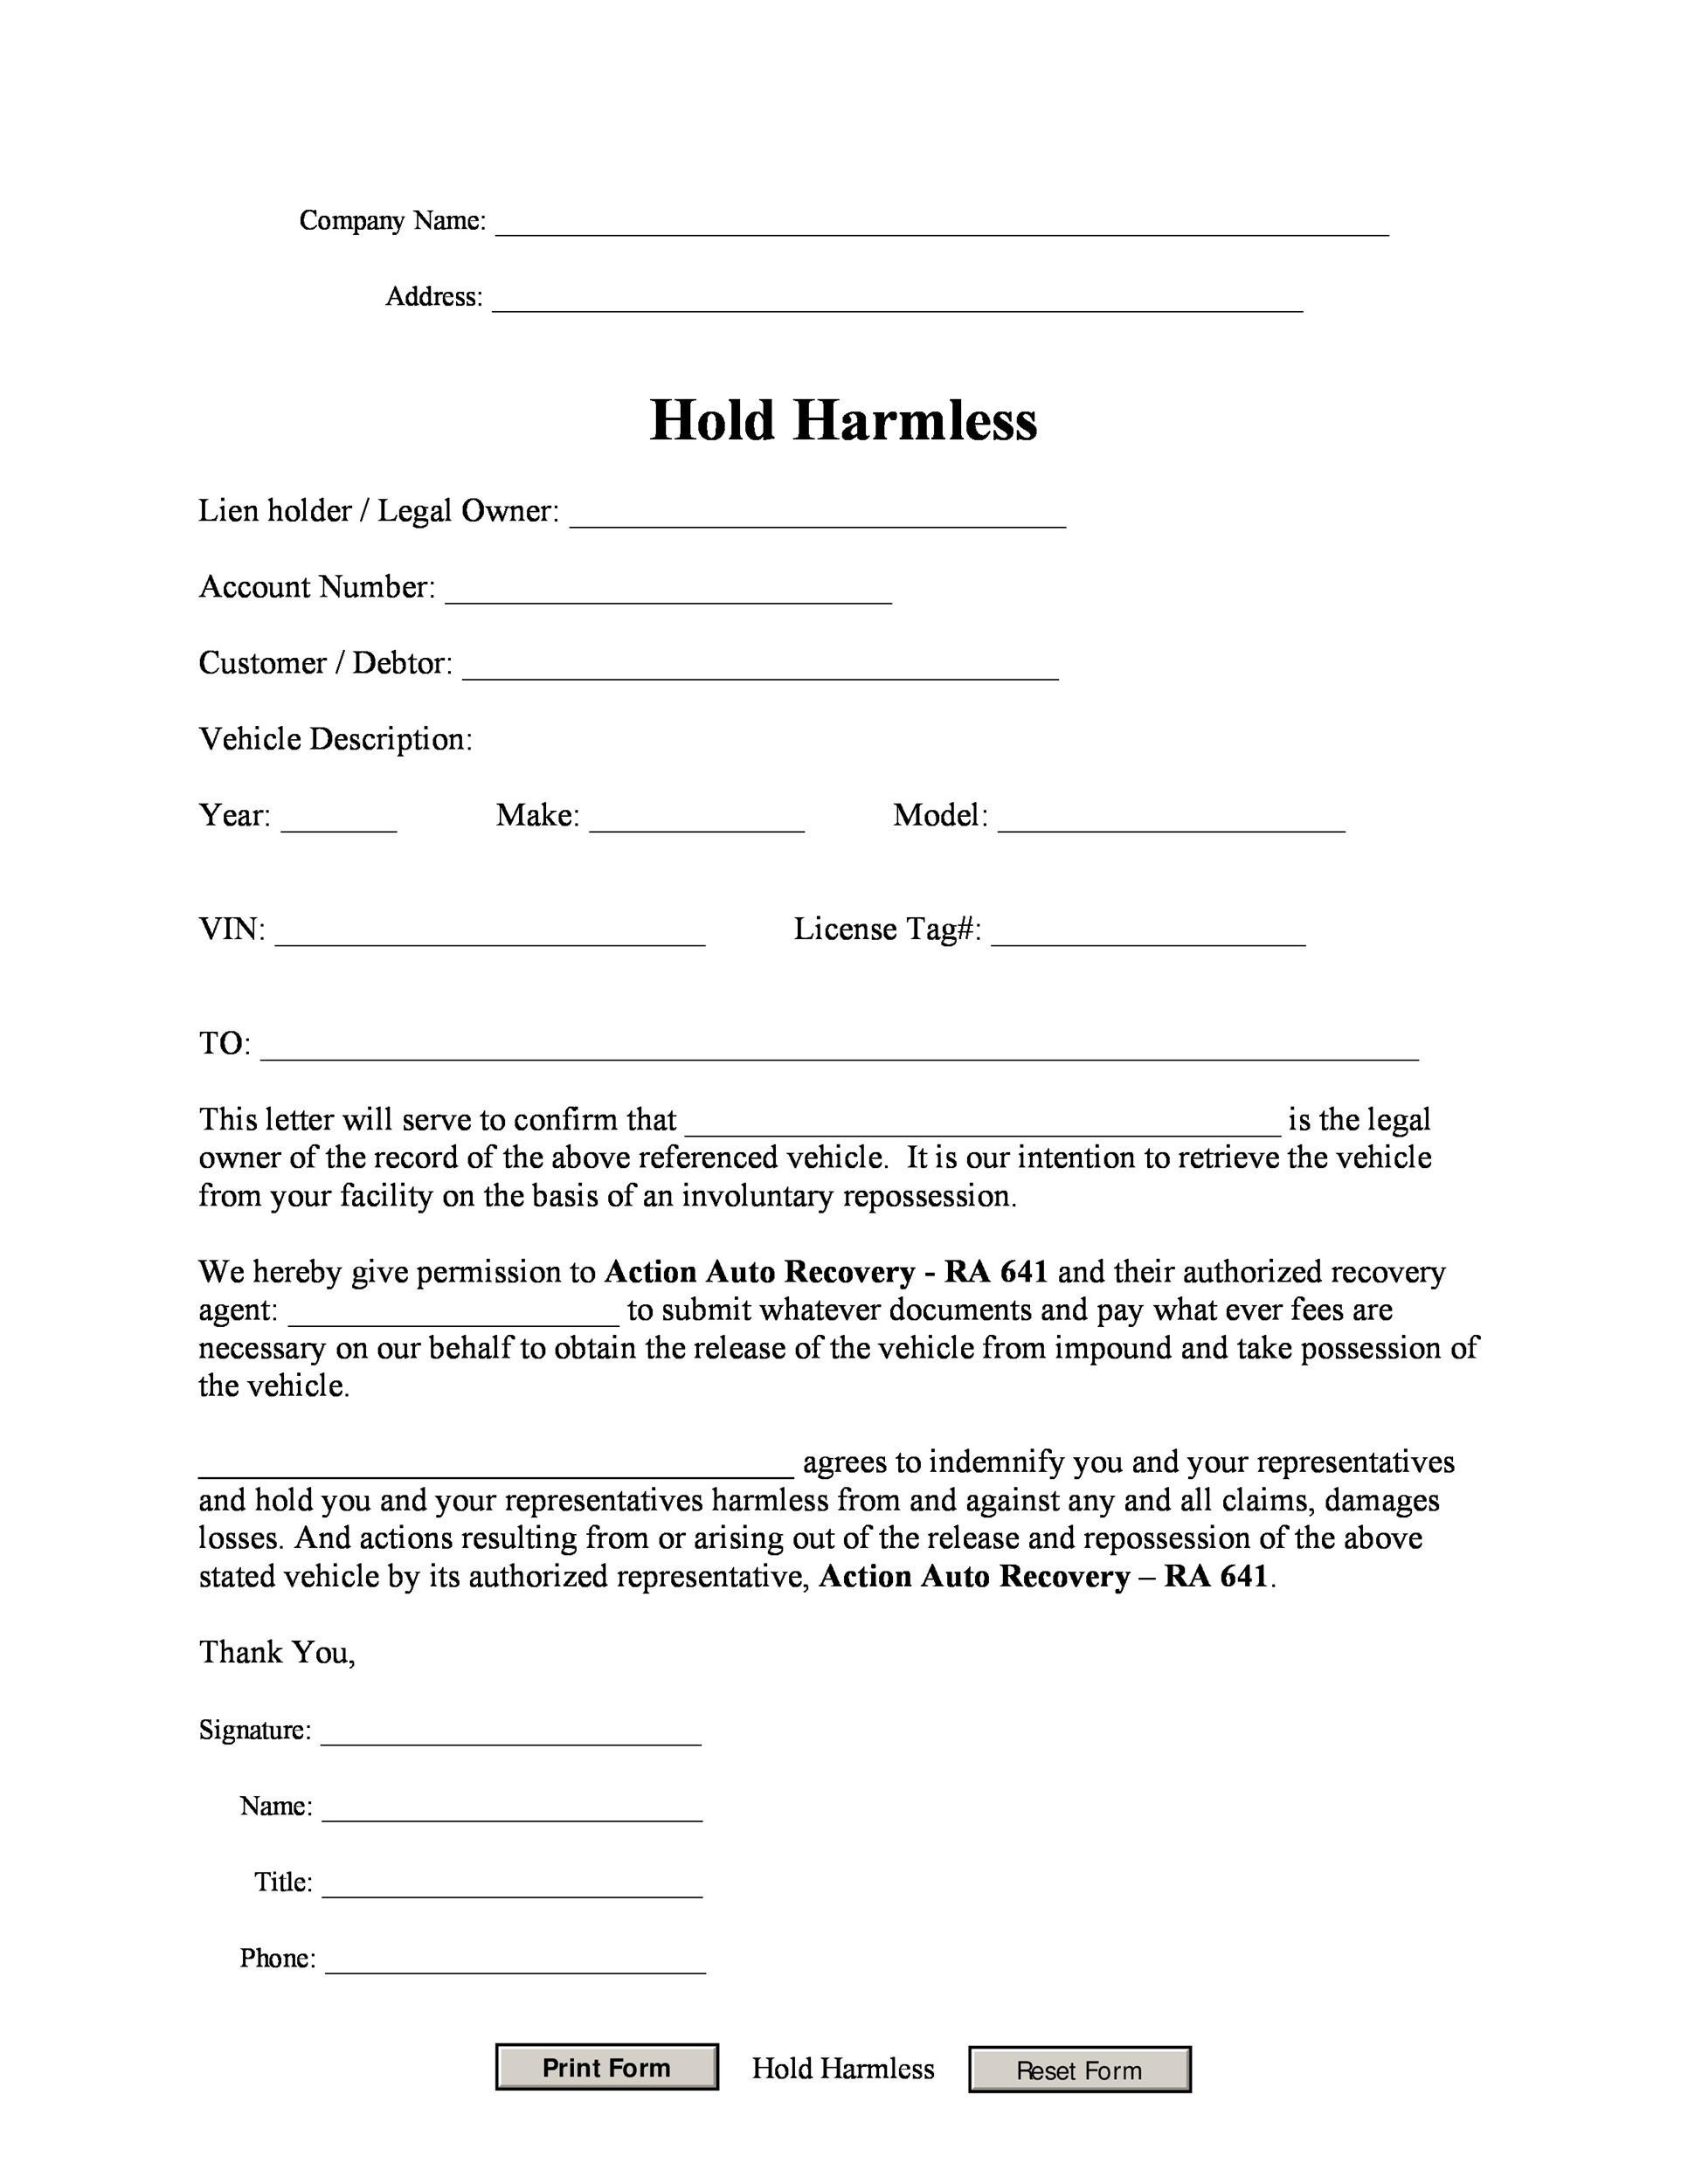 40+ Hold Harmless Agreement Templates (Free) ᐅ TemplateLab